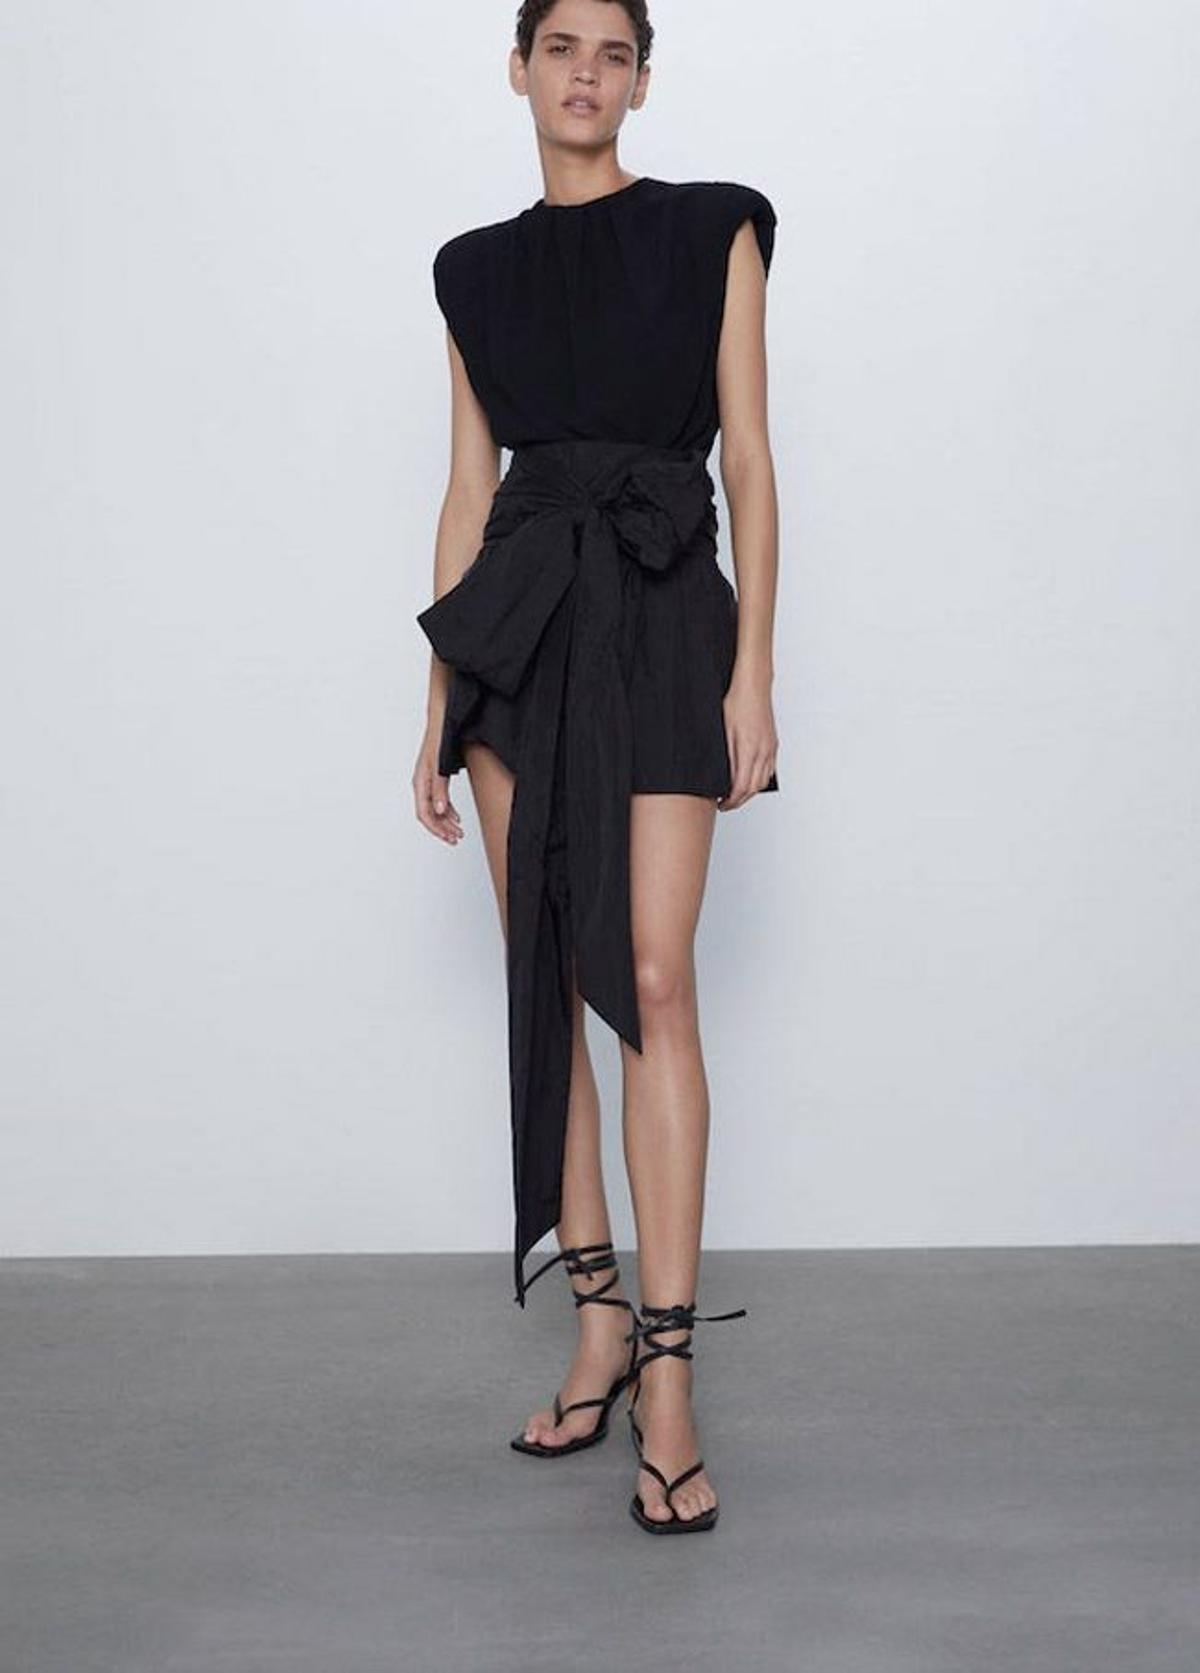 Minifalda negra con maxilazo, de Zara